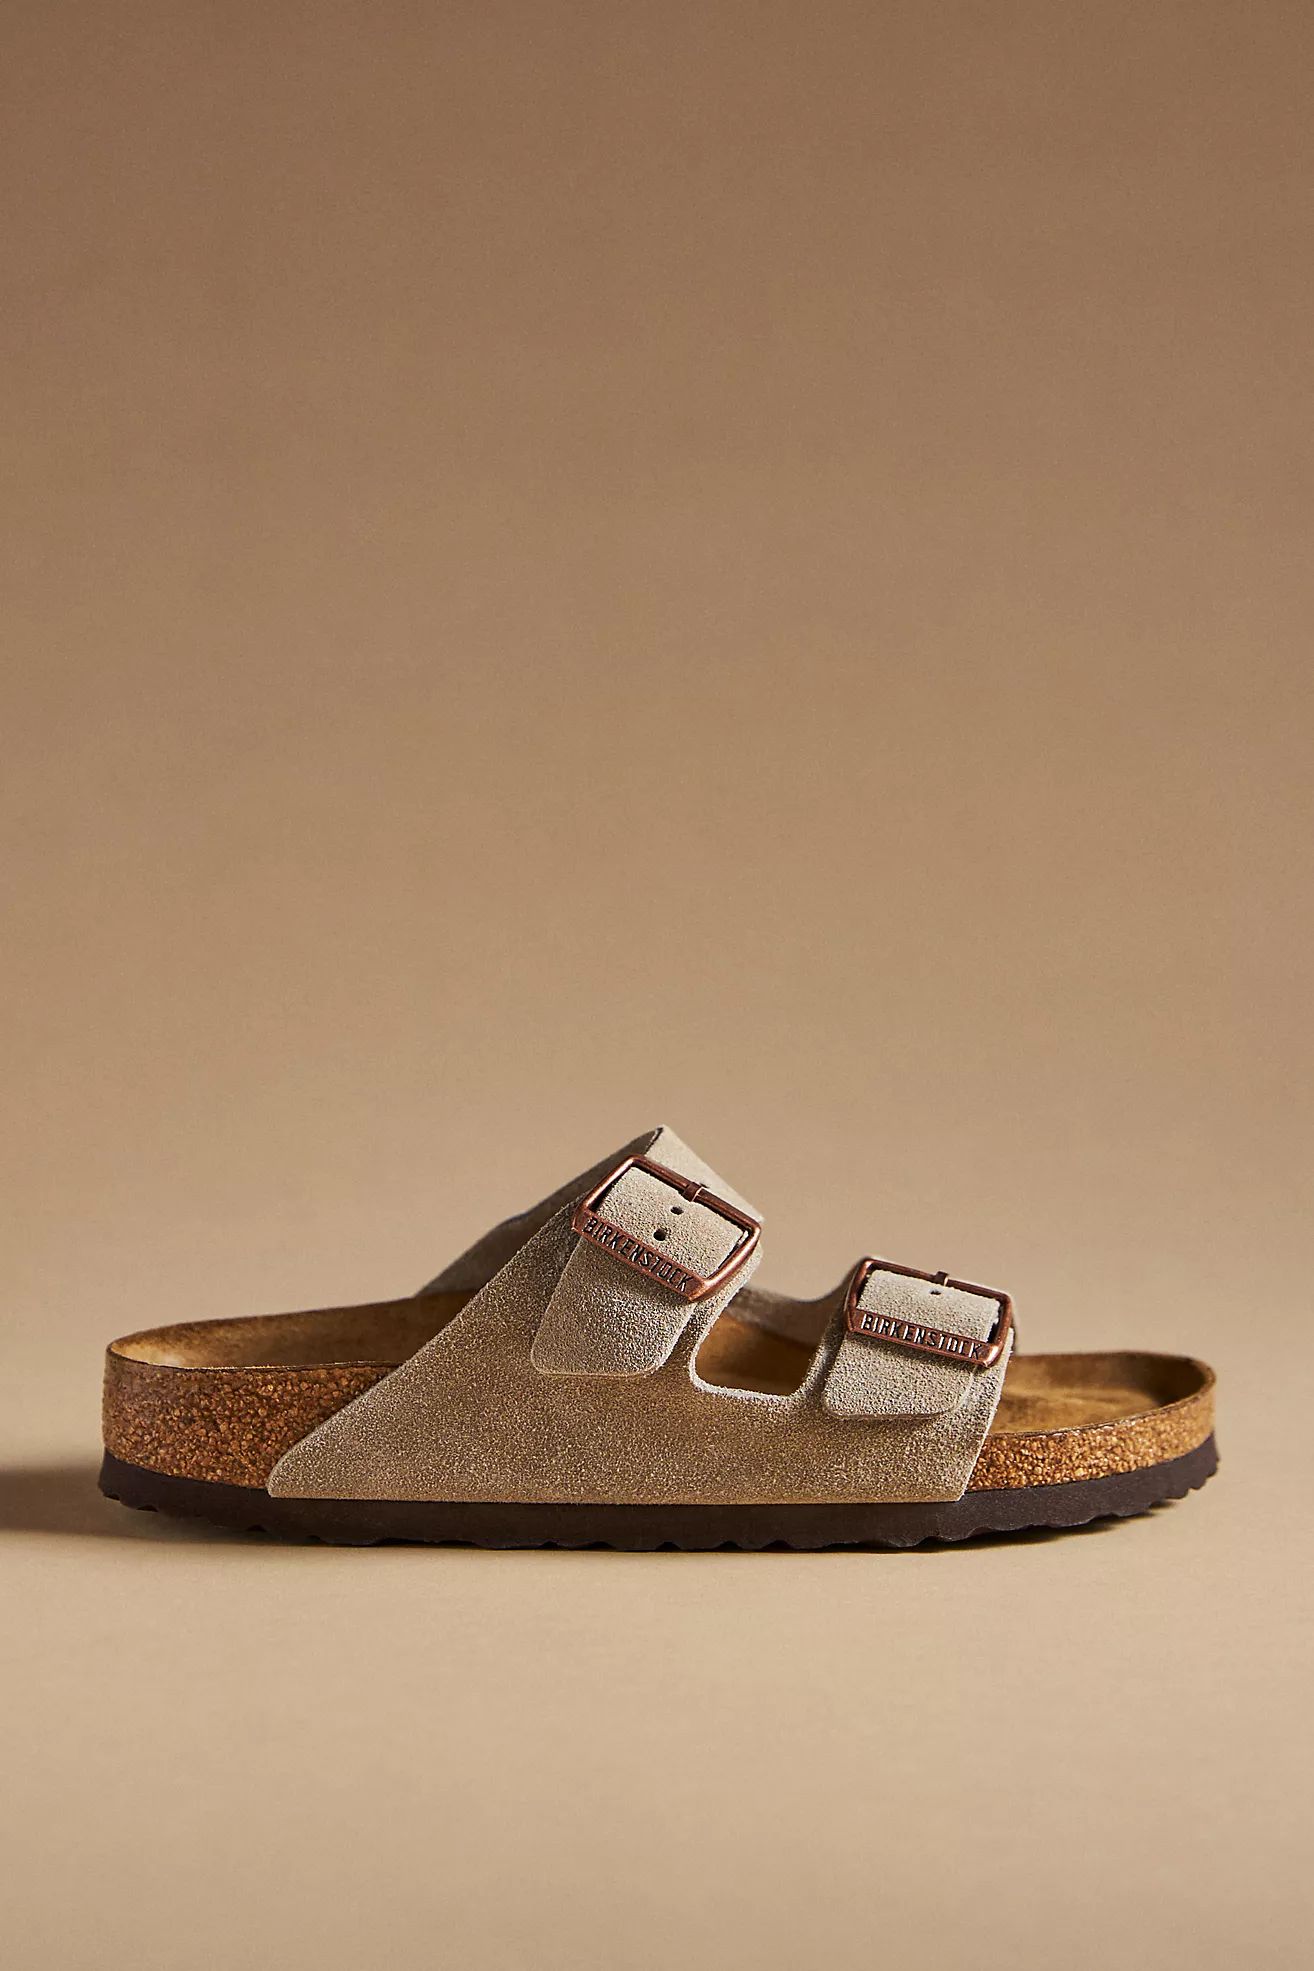 Birkenstock Arizona Suede Soft Footbed Sandals | Anthropologie (US)